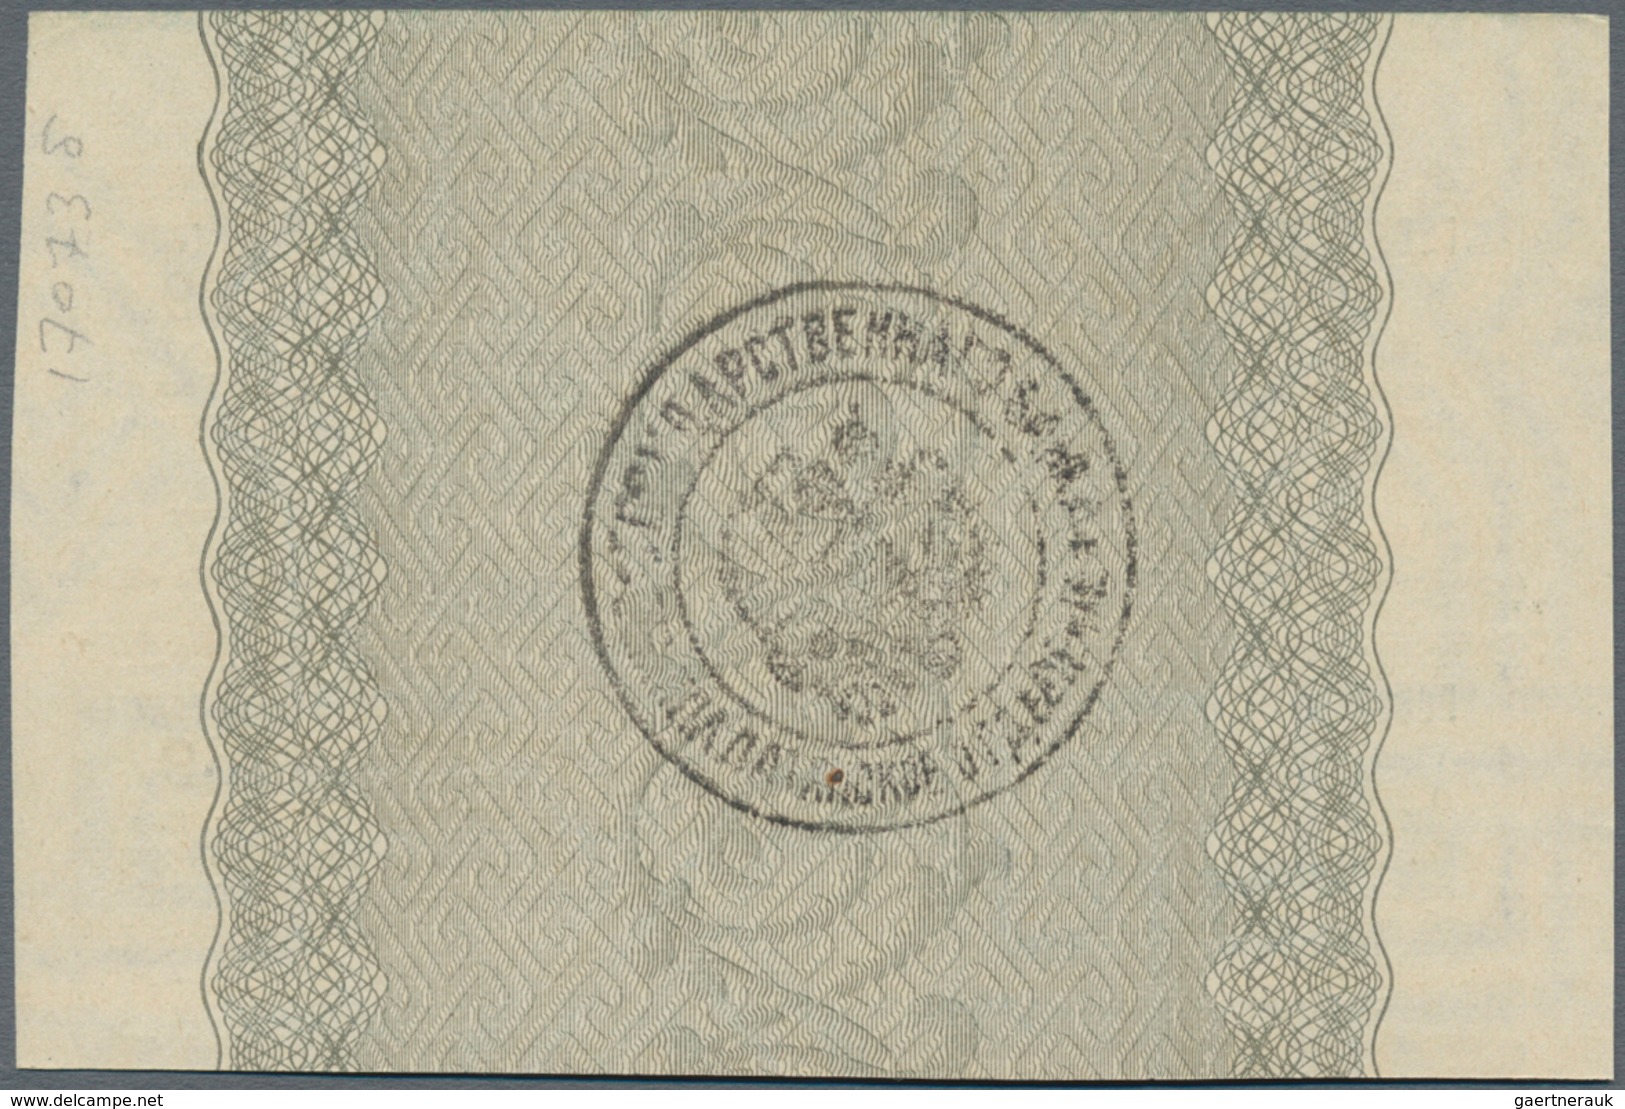 Russia / Russland: Kazakhstan - Semipalatinsk 5 Rubles 50 Kopeks 1916, P.NL (R. 12277), Condition: U - Rusland